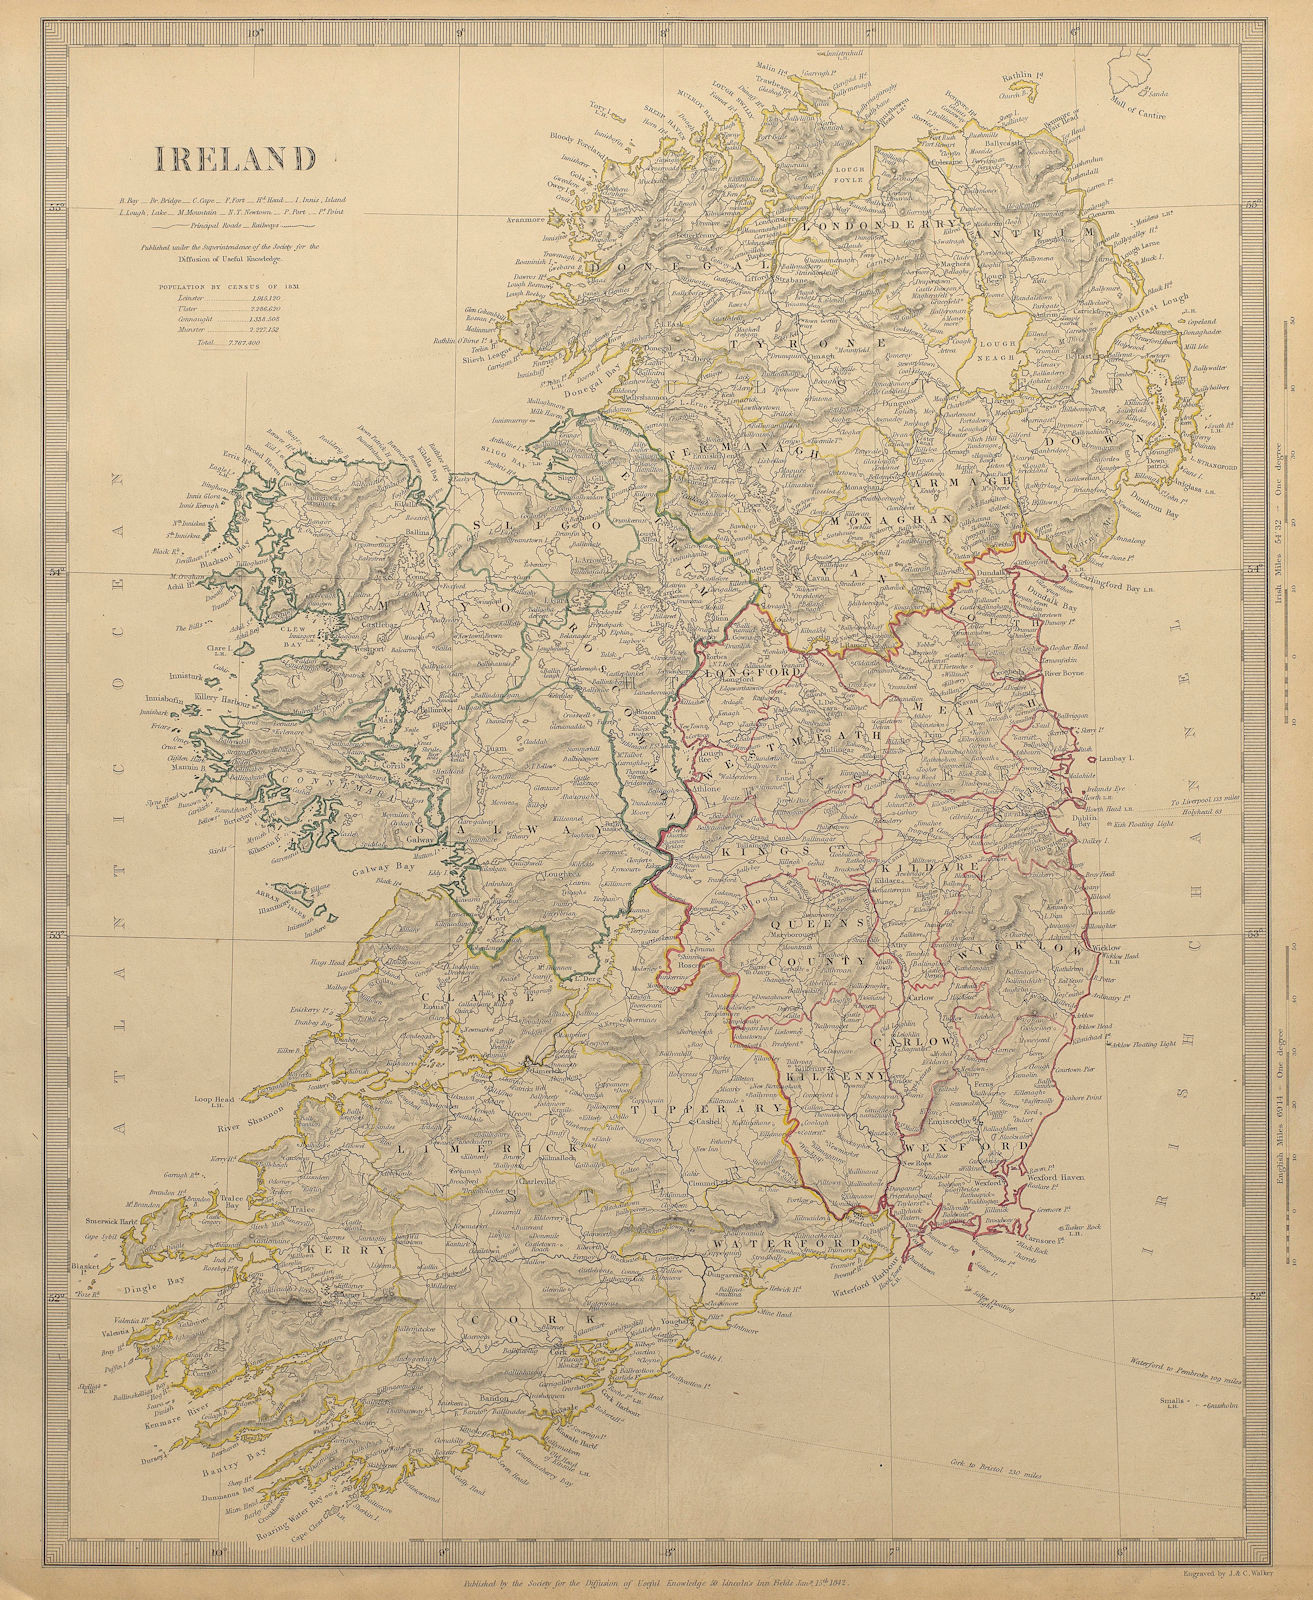 Associate Product IRELAND with roads. 1st Irish railway Kingstown-Dublin-Drogheda SDUK 1844 map